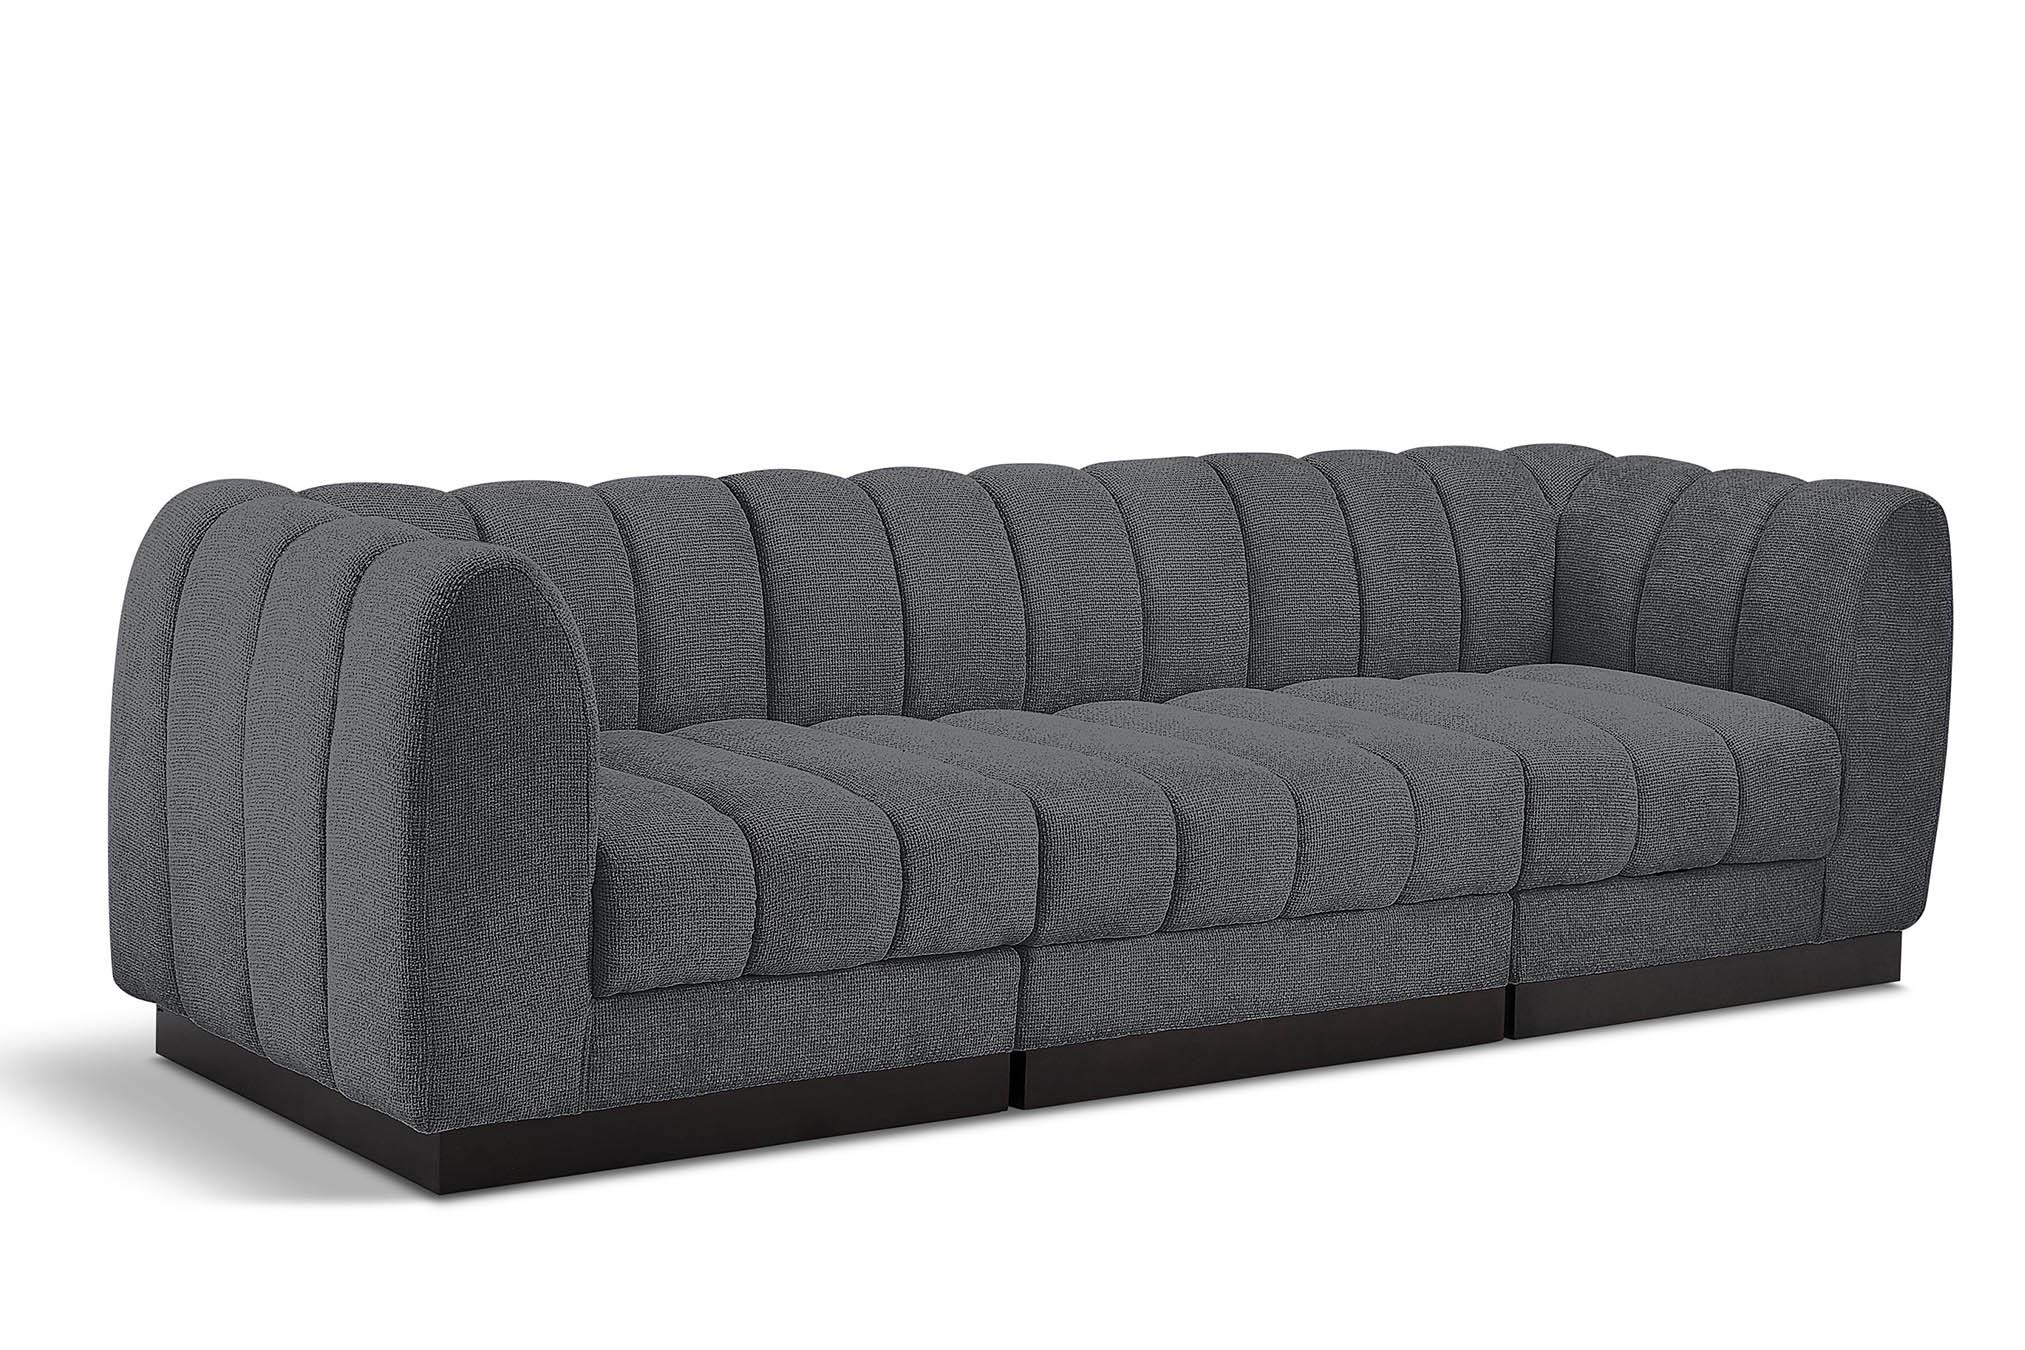 Contemporary, Modern Modular Sofa QUINN 124Grey-S101 124Grey-S101 in Gray Chenille